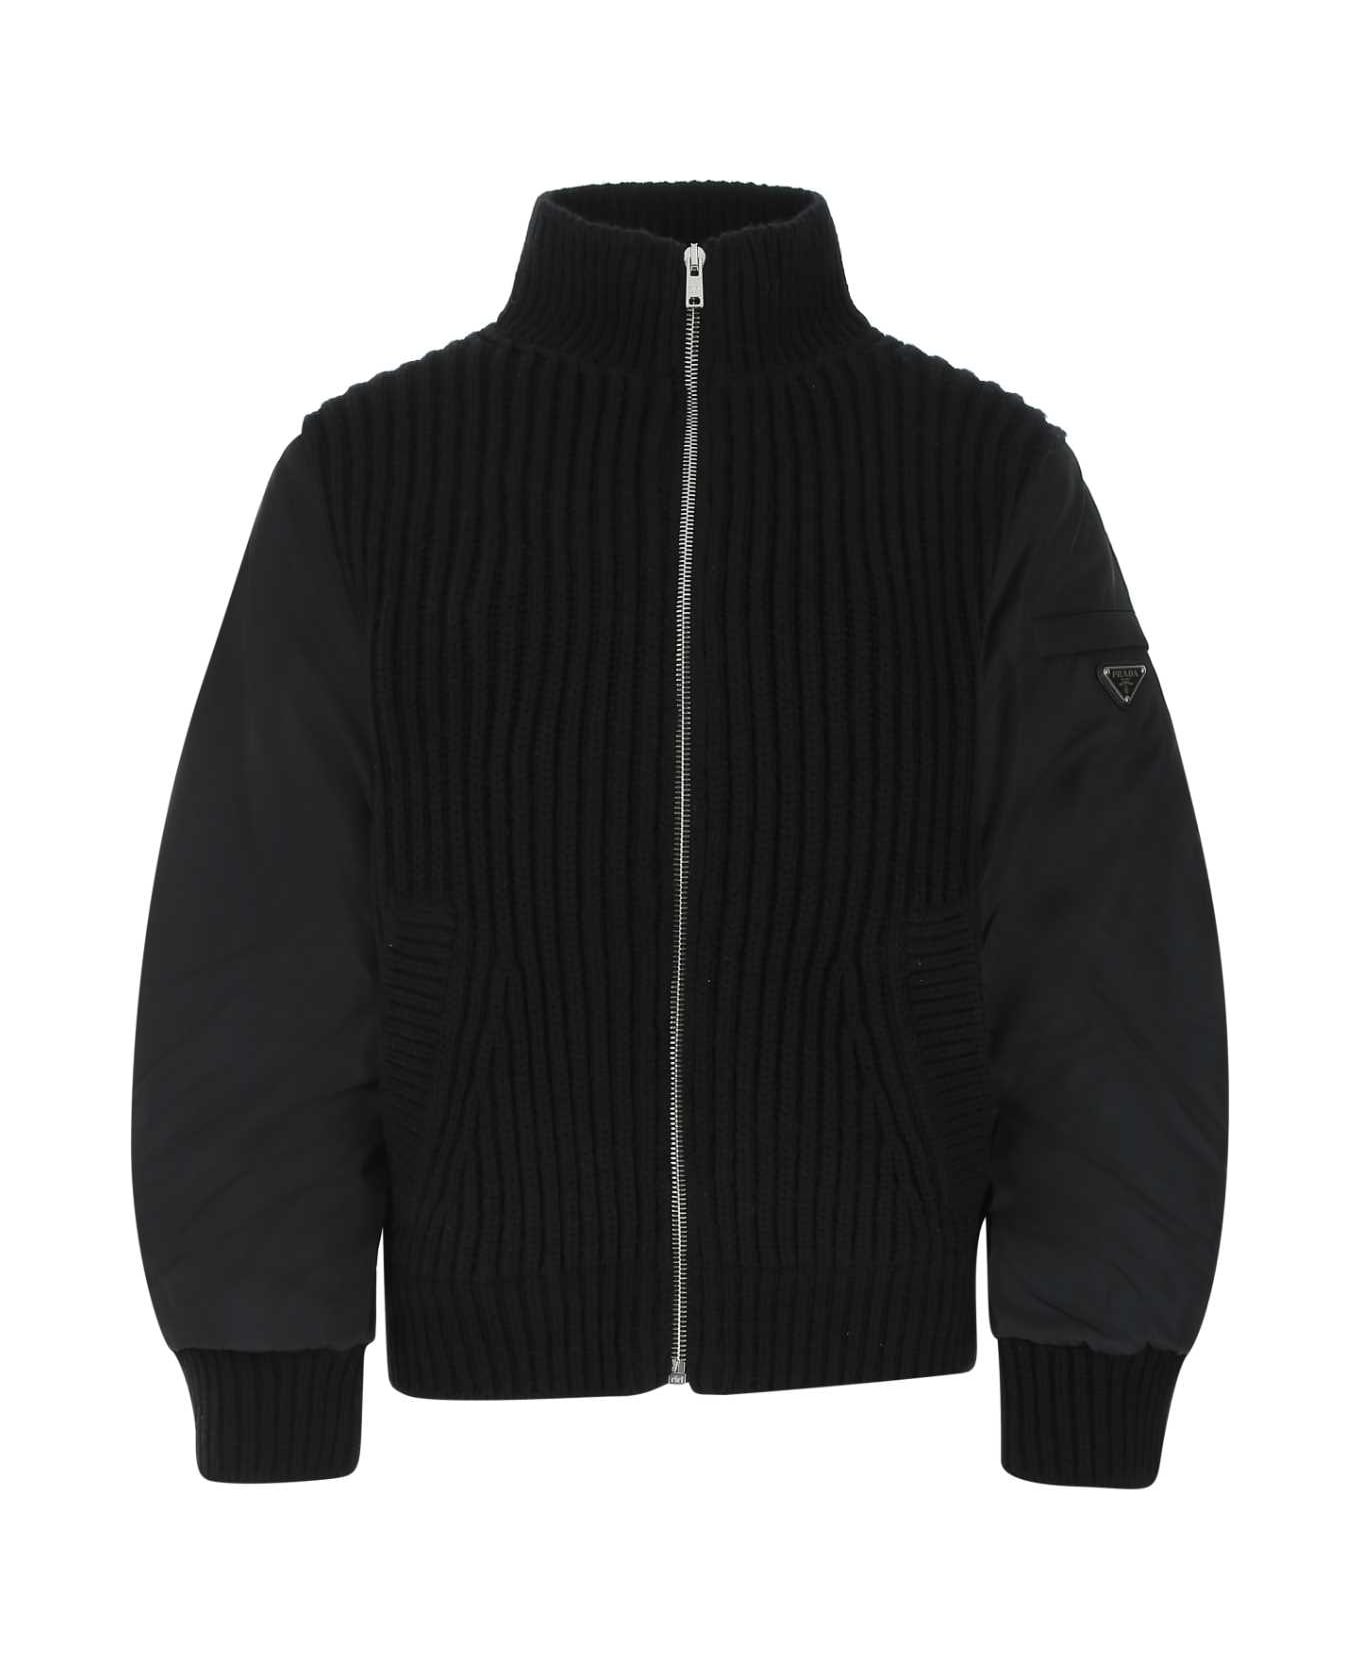 Prada Black Cashmere And Re-nylon Jacket - F0002